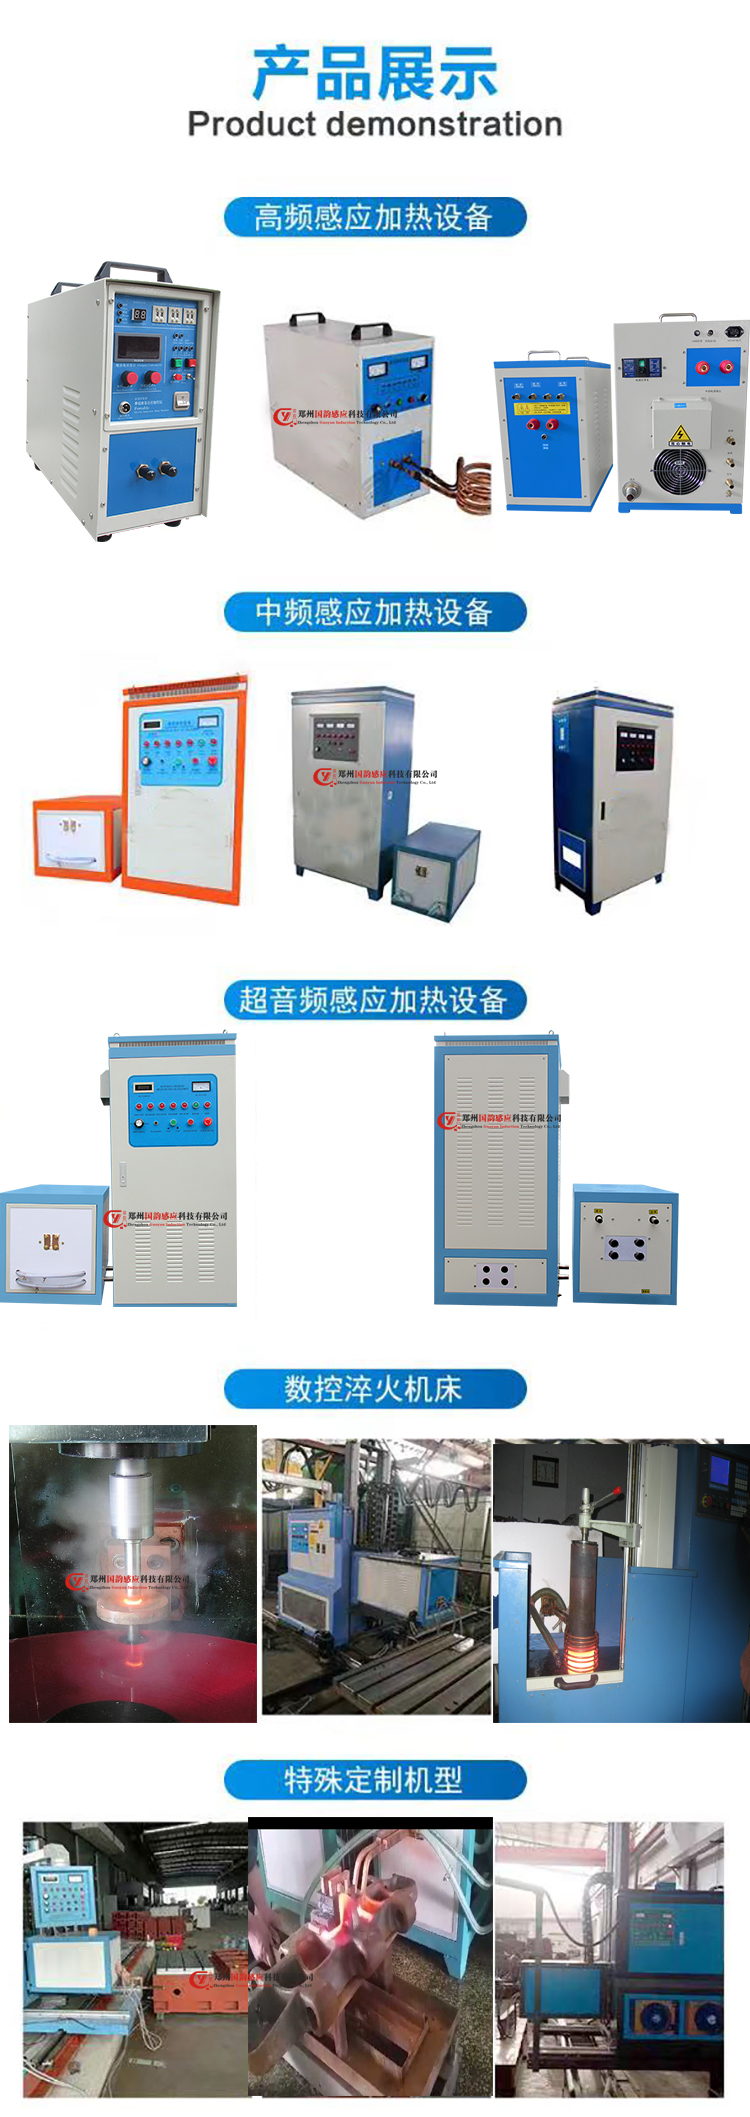 Gear quenching equipment, gear ring quenching machine, quenching heating equipment, Guoyun Electronics Factory